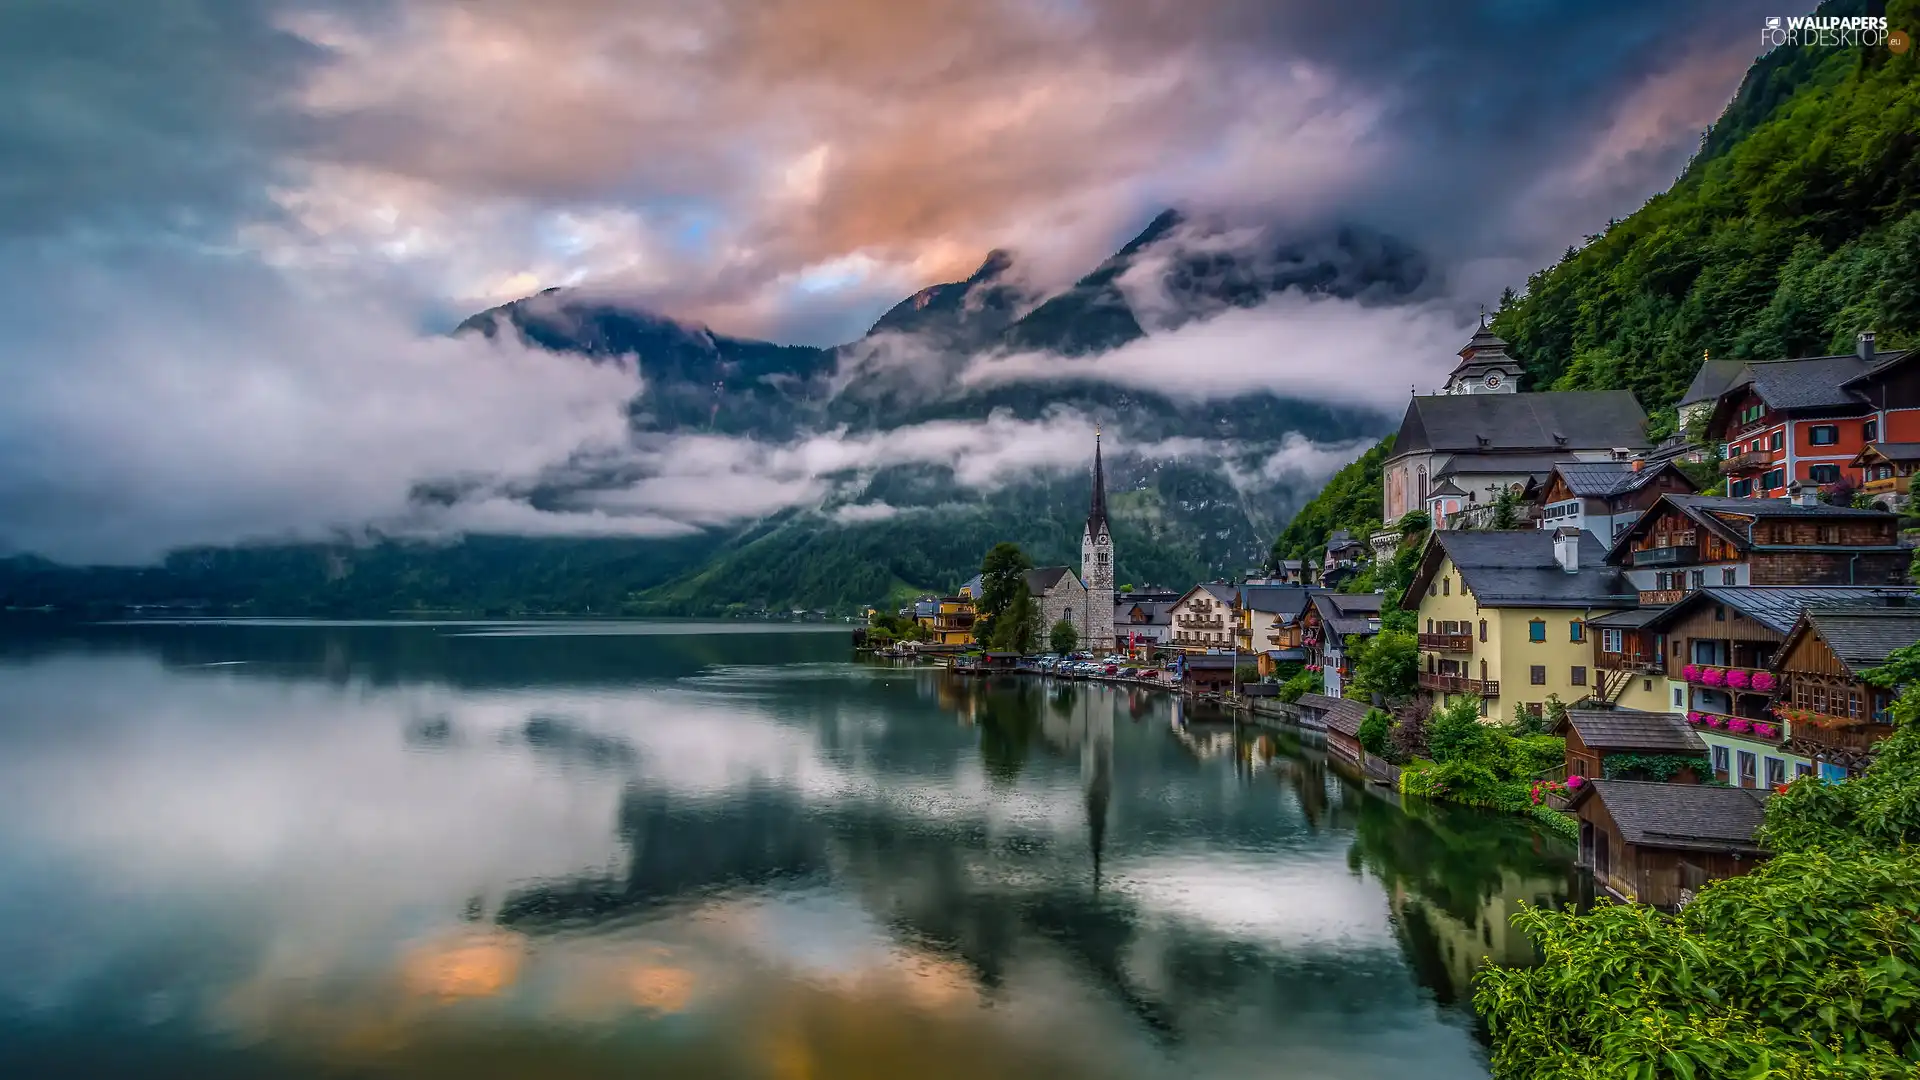 Salzburg Slate Alps, Hallstattersee Lake, Austria, Houses, Hallstatt, Mountains, Fog, Church